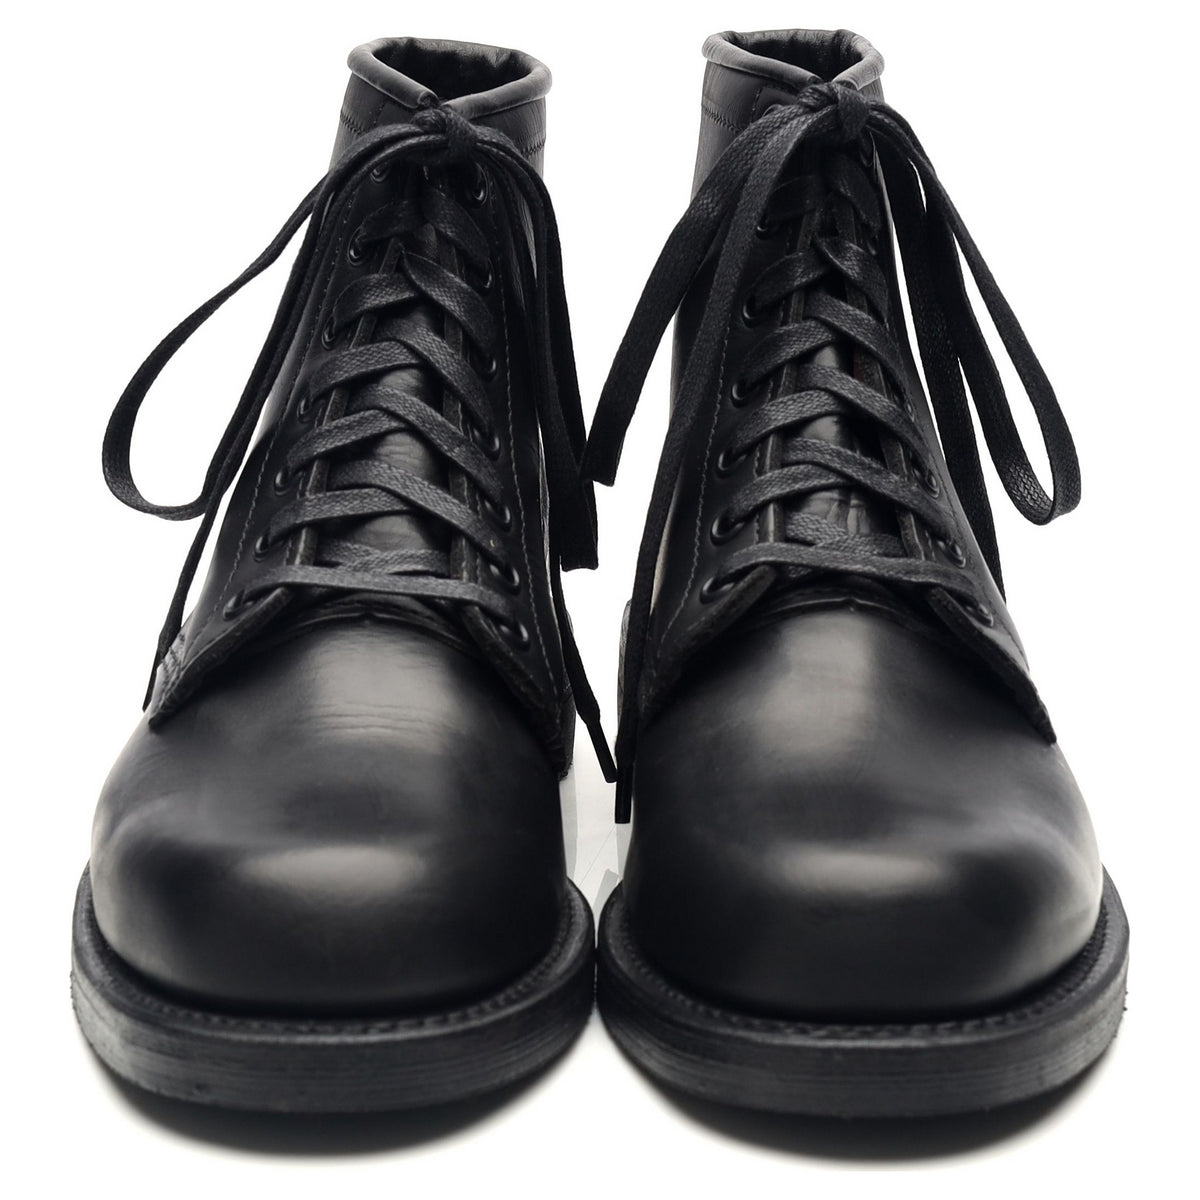 Black Leather Service Boots UK 6.5 US 7.5